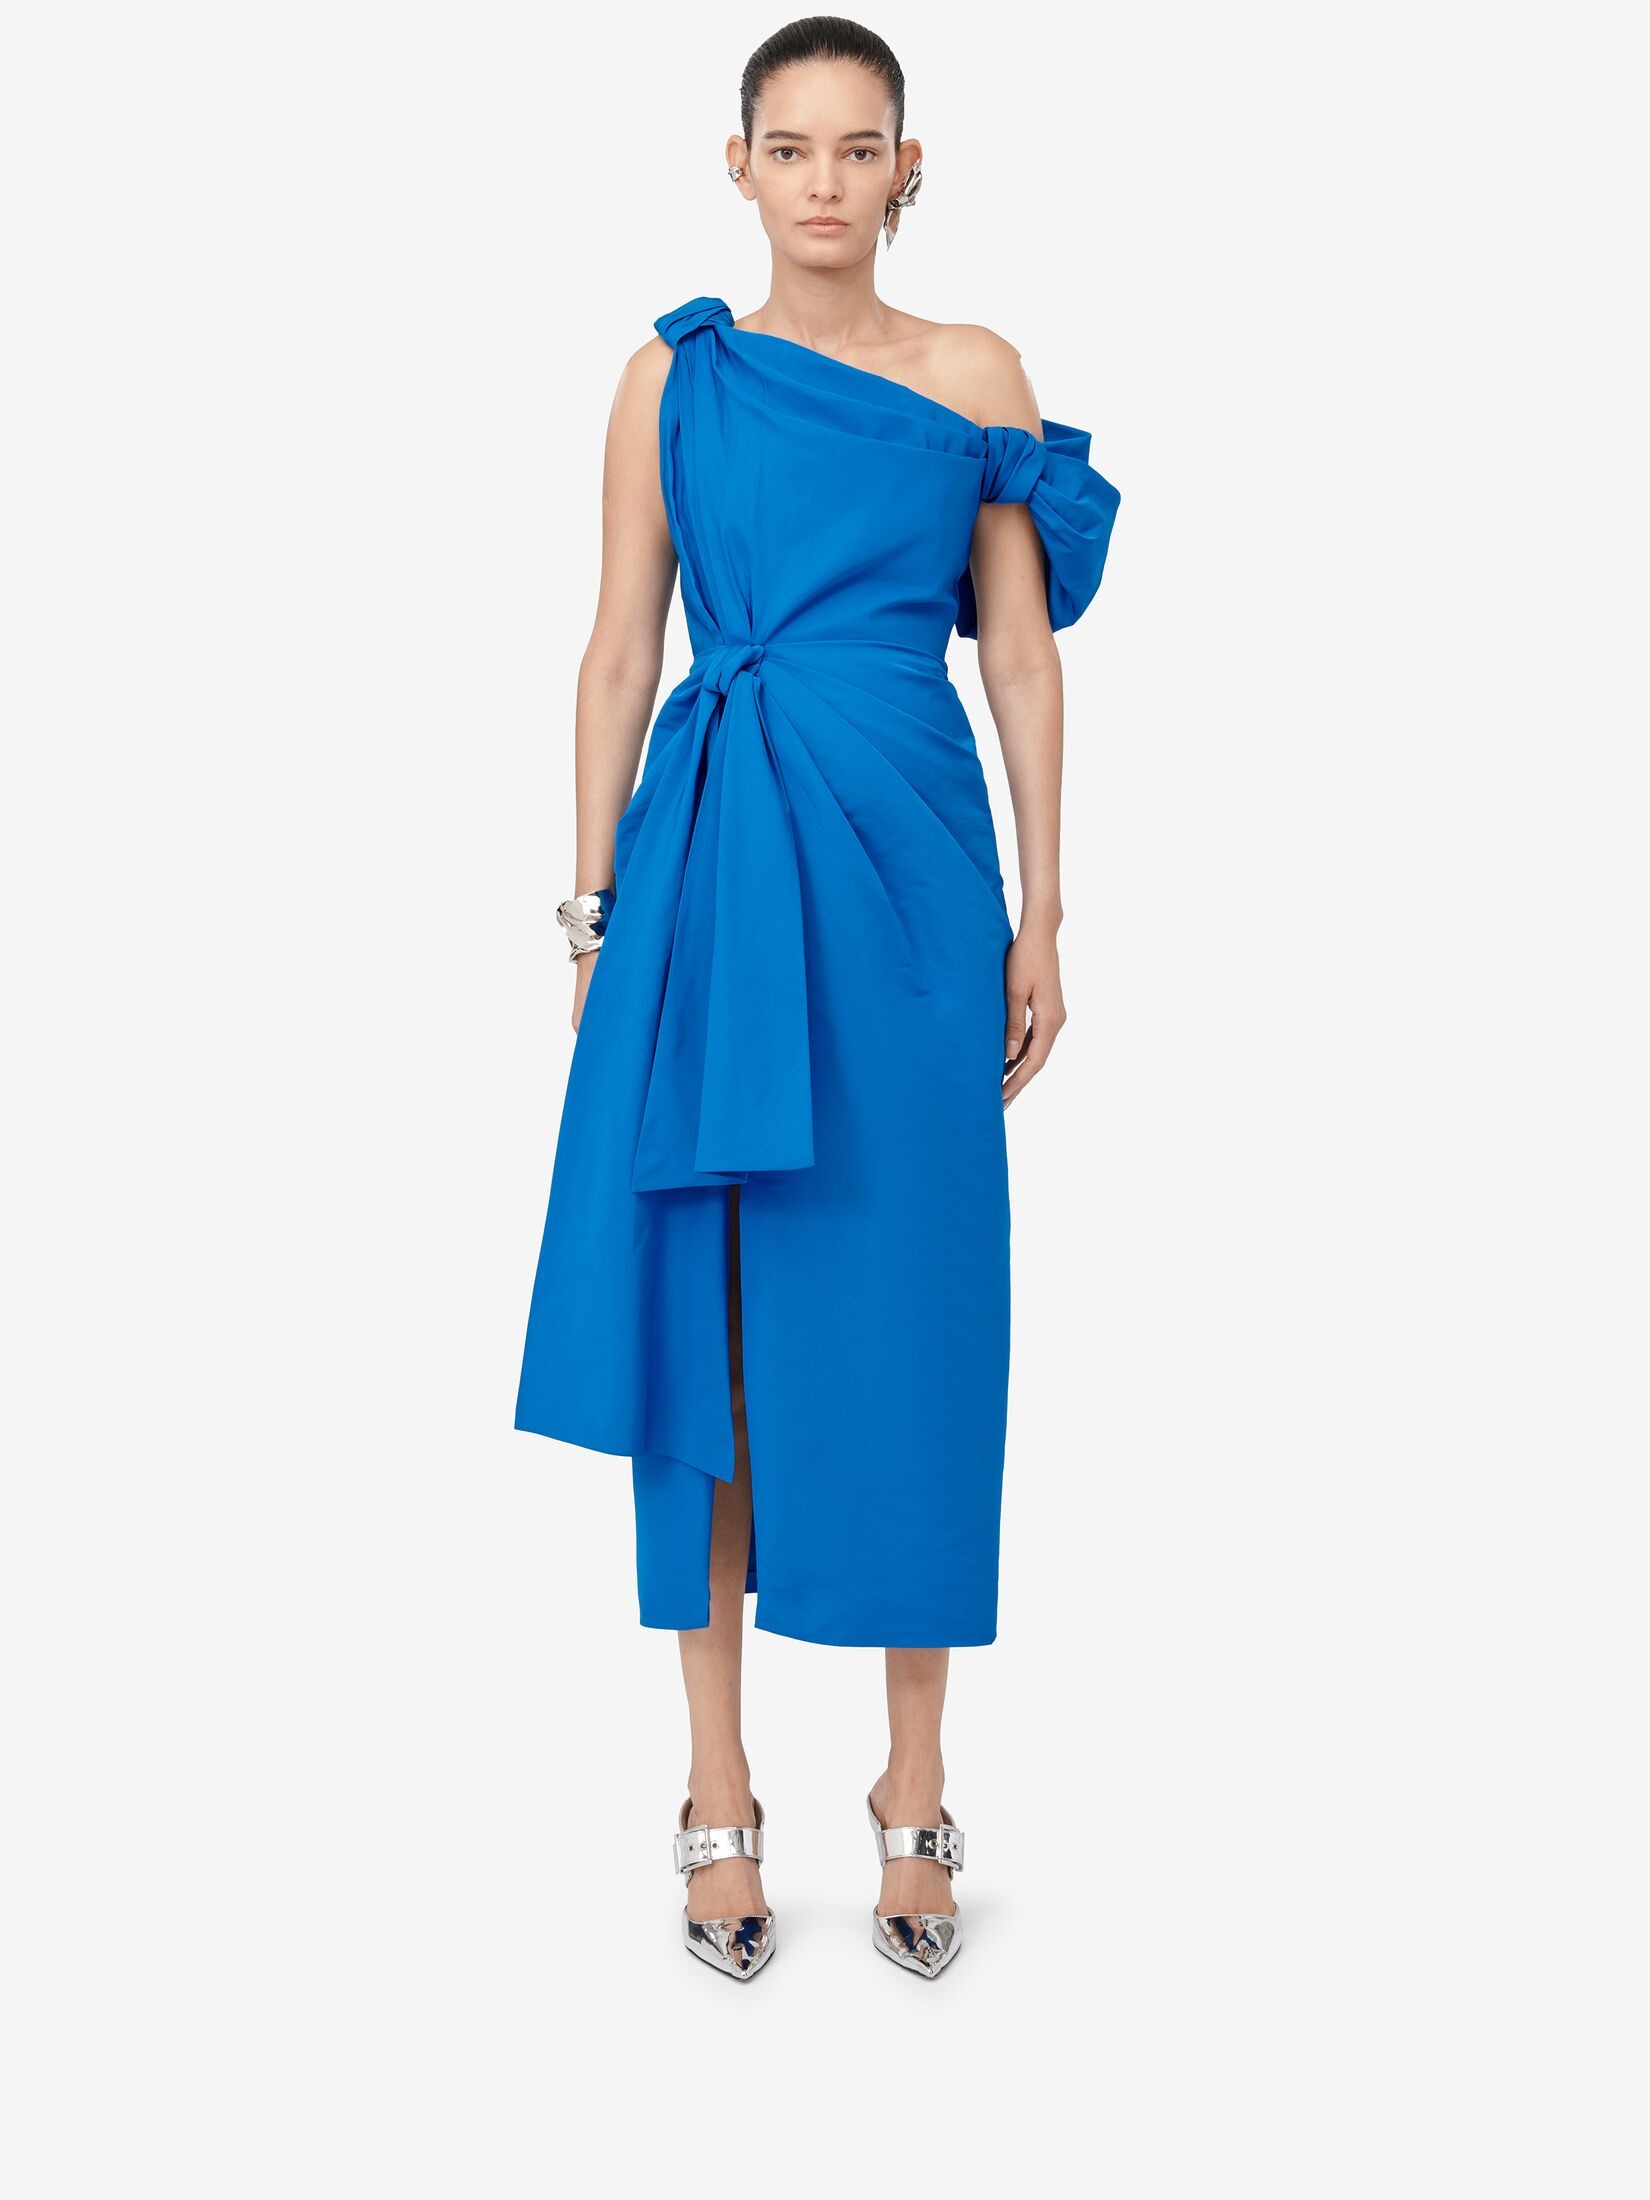 Women's Knotted Asymmetric Pencil Dress in Lapis Blue - 2